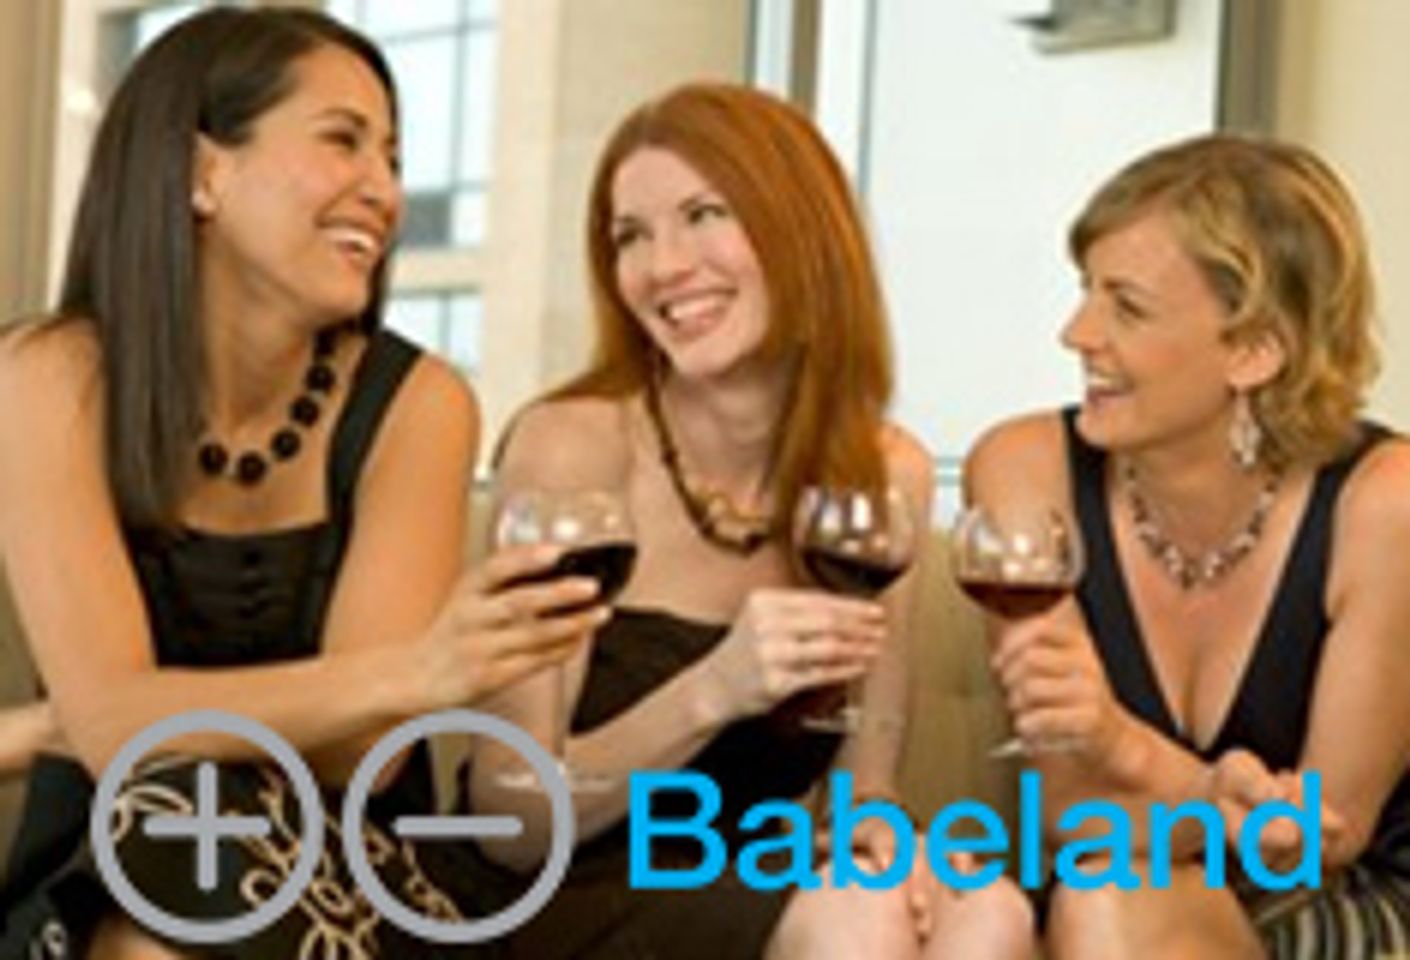 Babeland Holds Erotic Wine Tasting Event